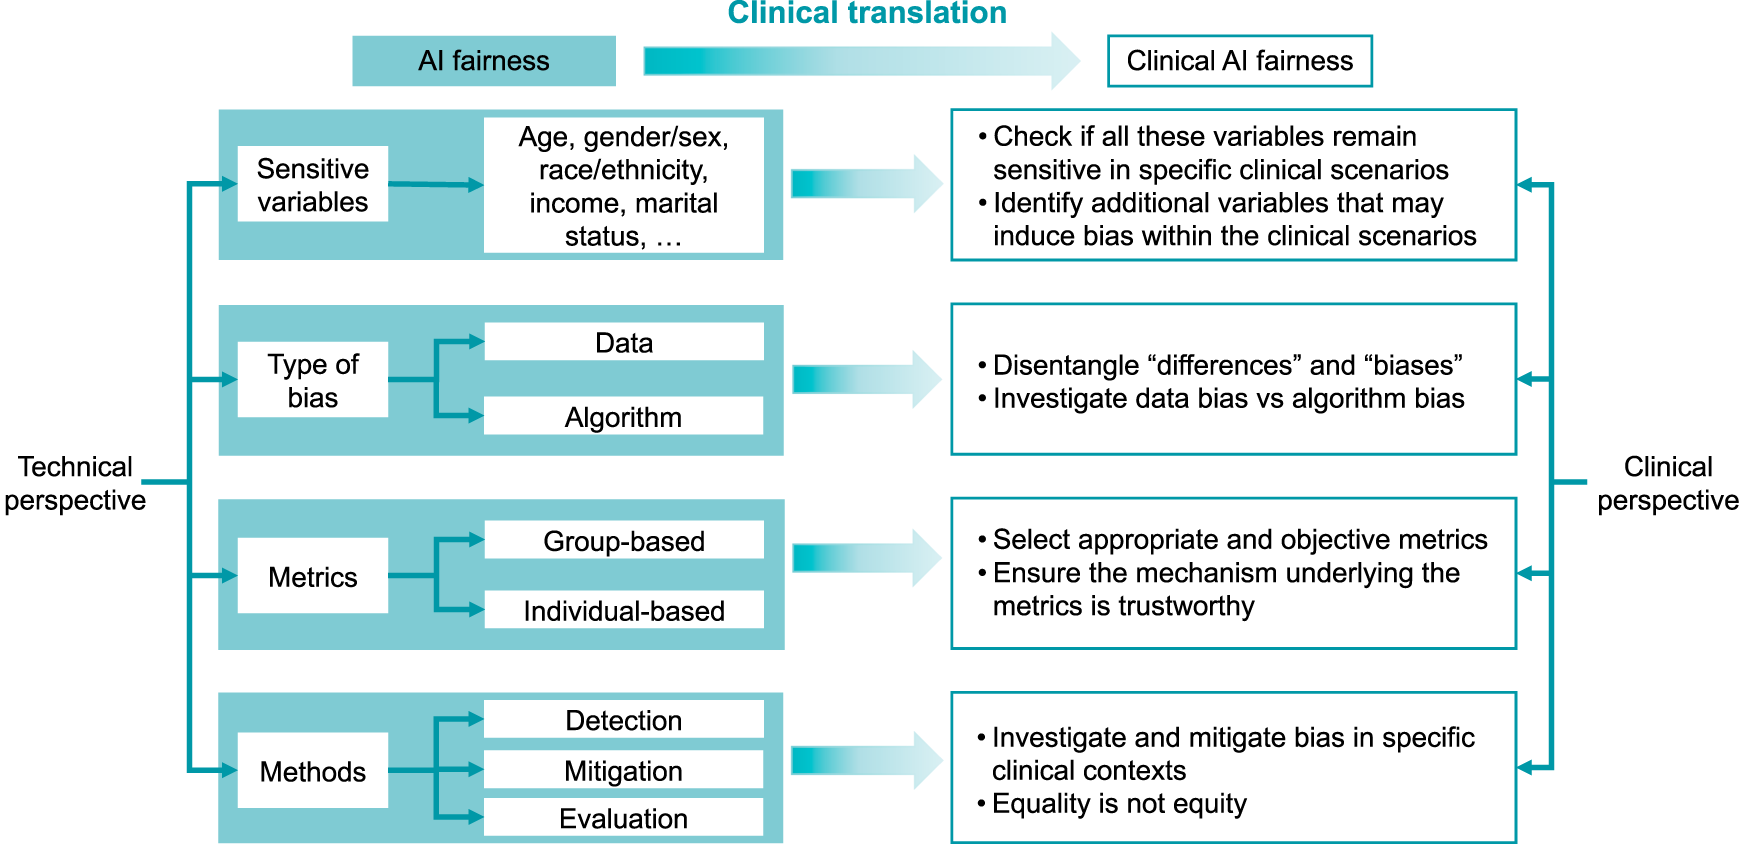 A translational perspective towards clinical AI fairness npj Digital Medicine